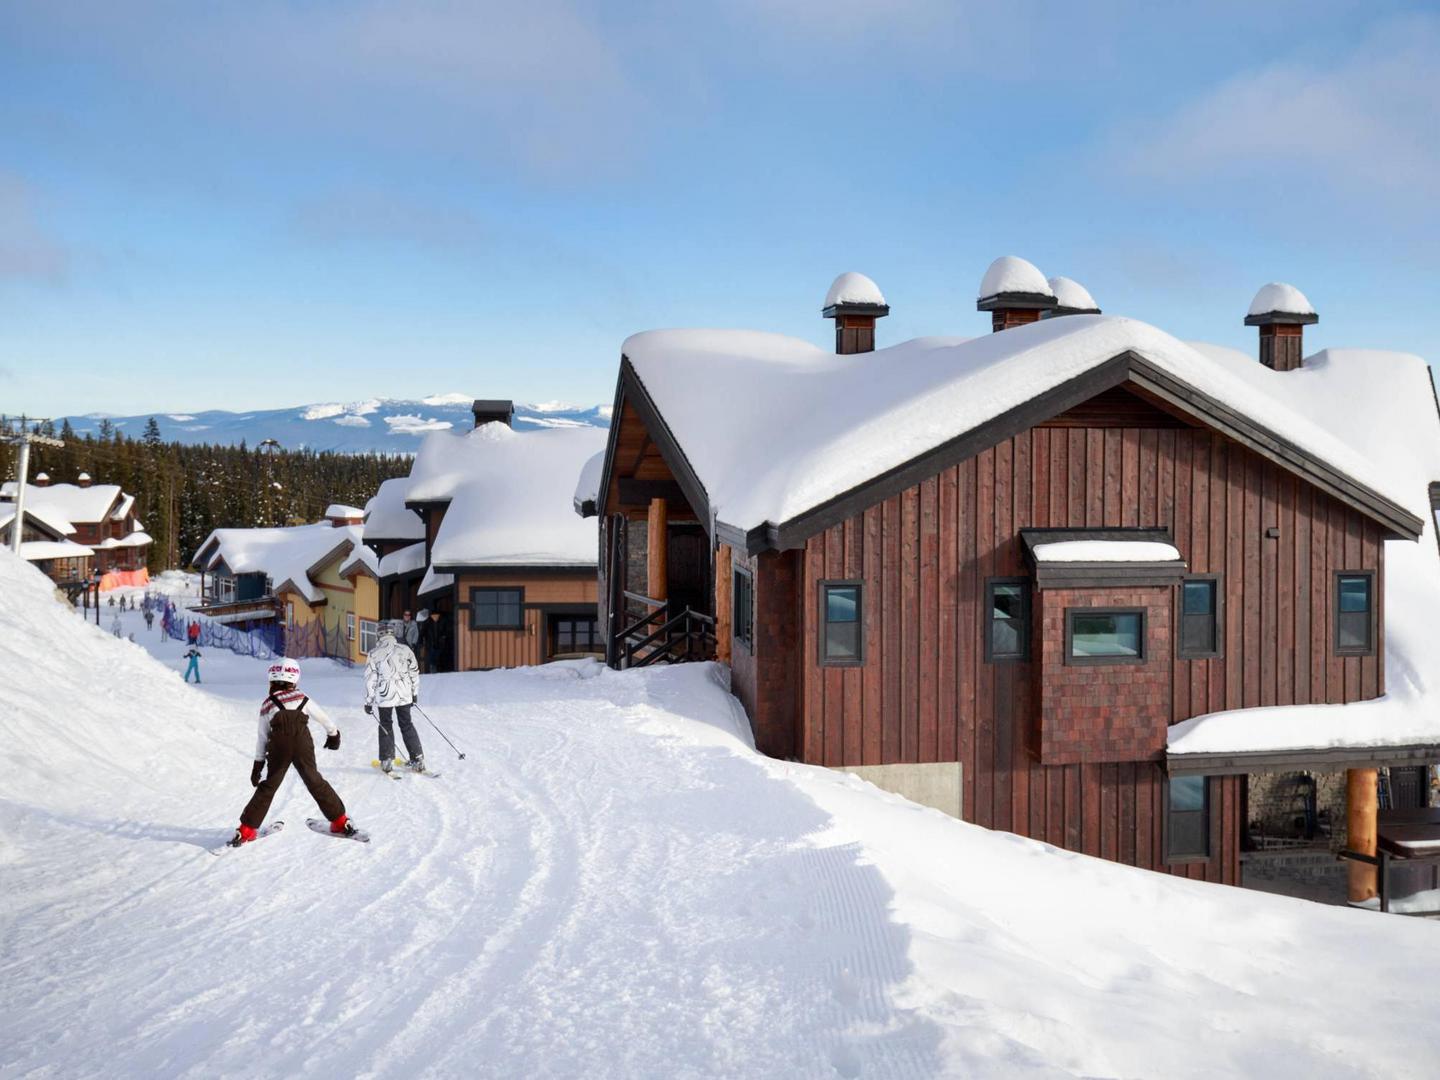 Skiers ski past some luxury vacation rentals manages by Luxury Mountain Vacation Rentals at Big White Ski Resort on a bluebird ski day.